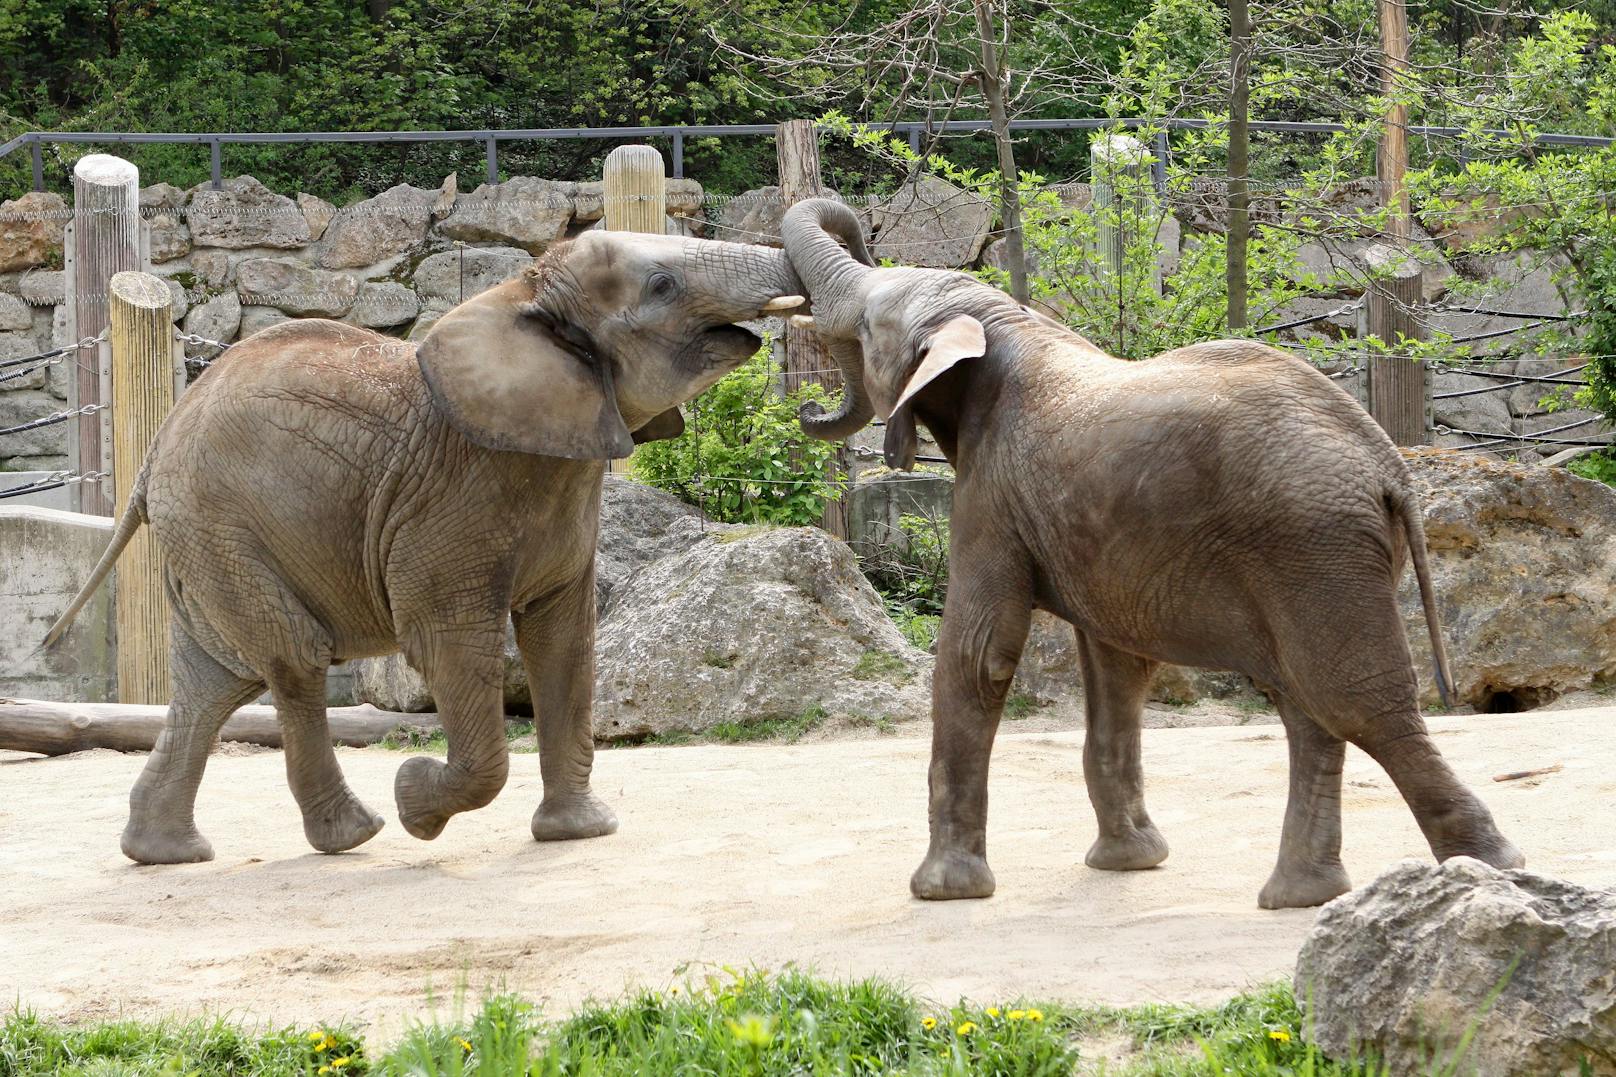 Der Elefantenbulle "Tembo" kam erst am 05.11.2020 in Schönbrunn an. <a href="https://www.heute.at/s/neuer-elefantenbulle-in-schoenbrunn-angekommen-100110991"><em>"Heute"</em> berichtete. </a>